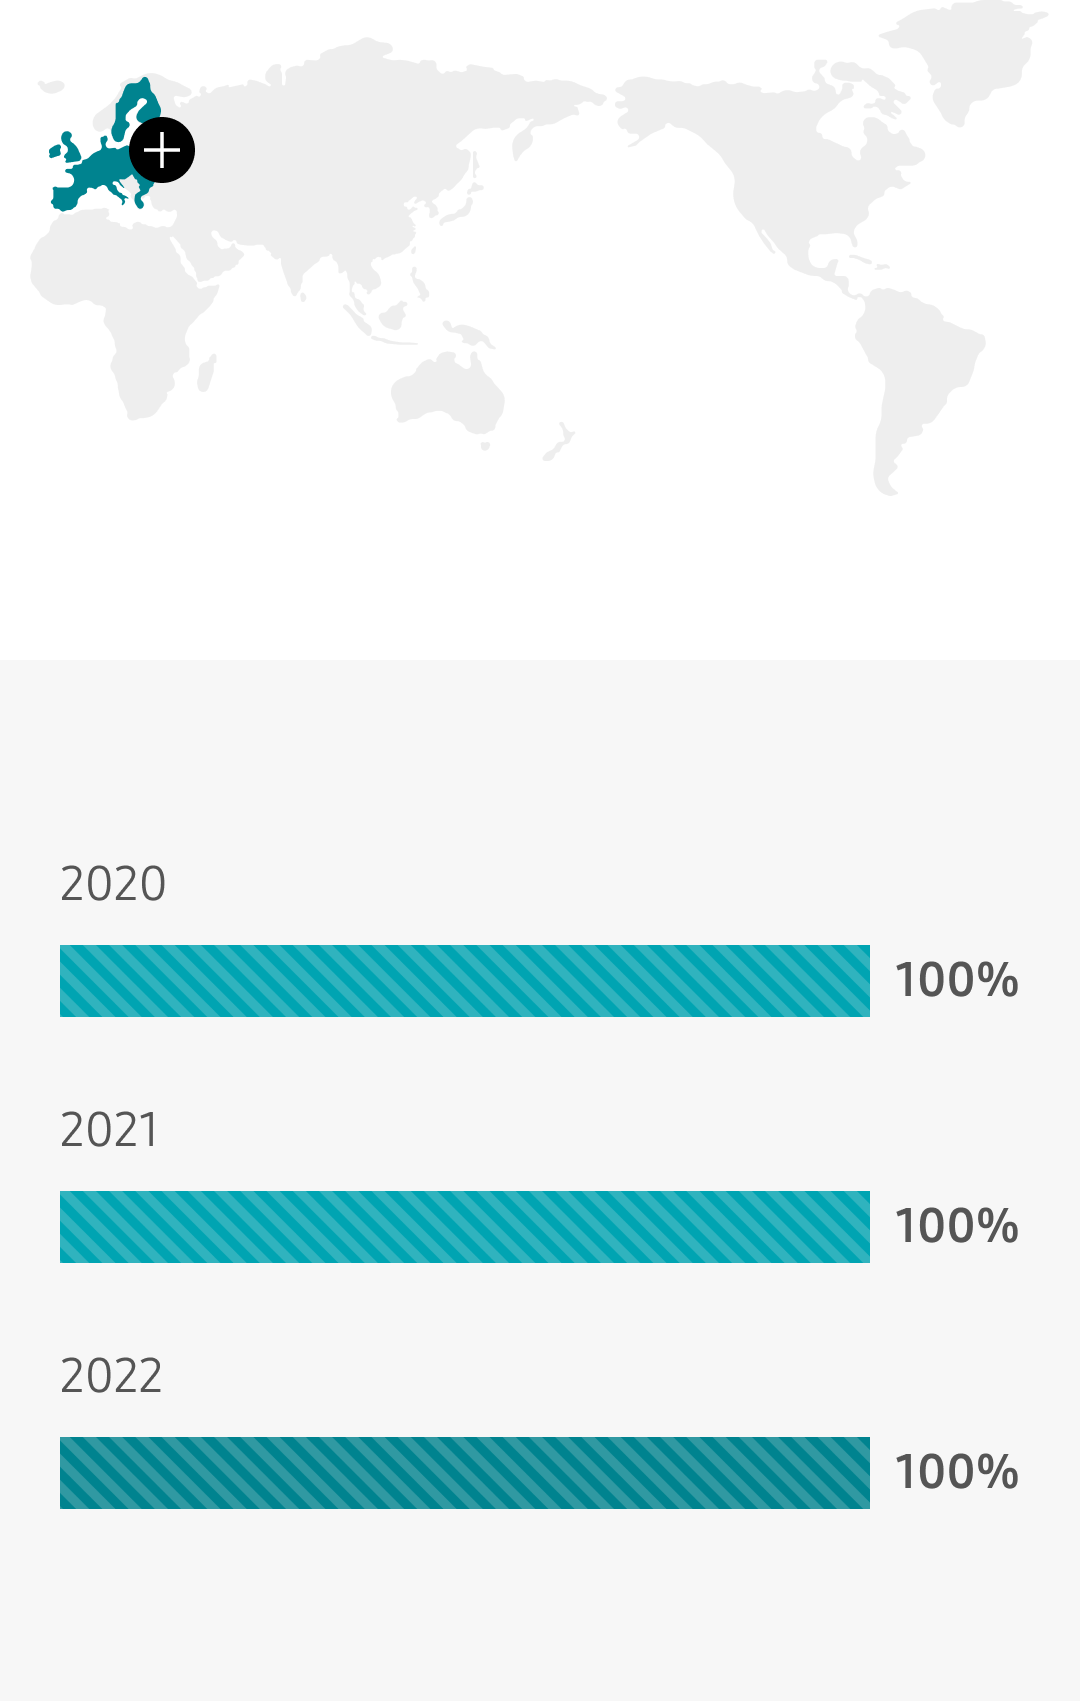 Europe 2019 95% 2020 100% 2021 100%